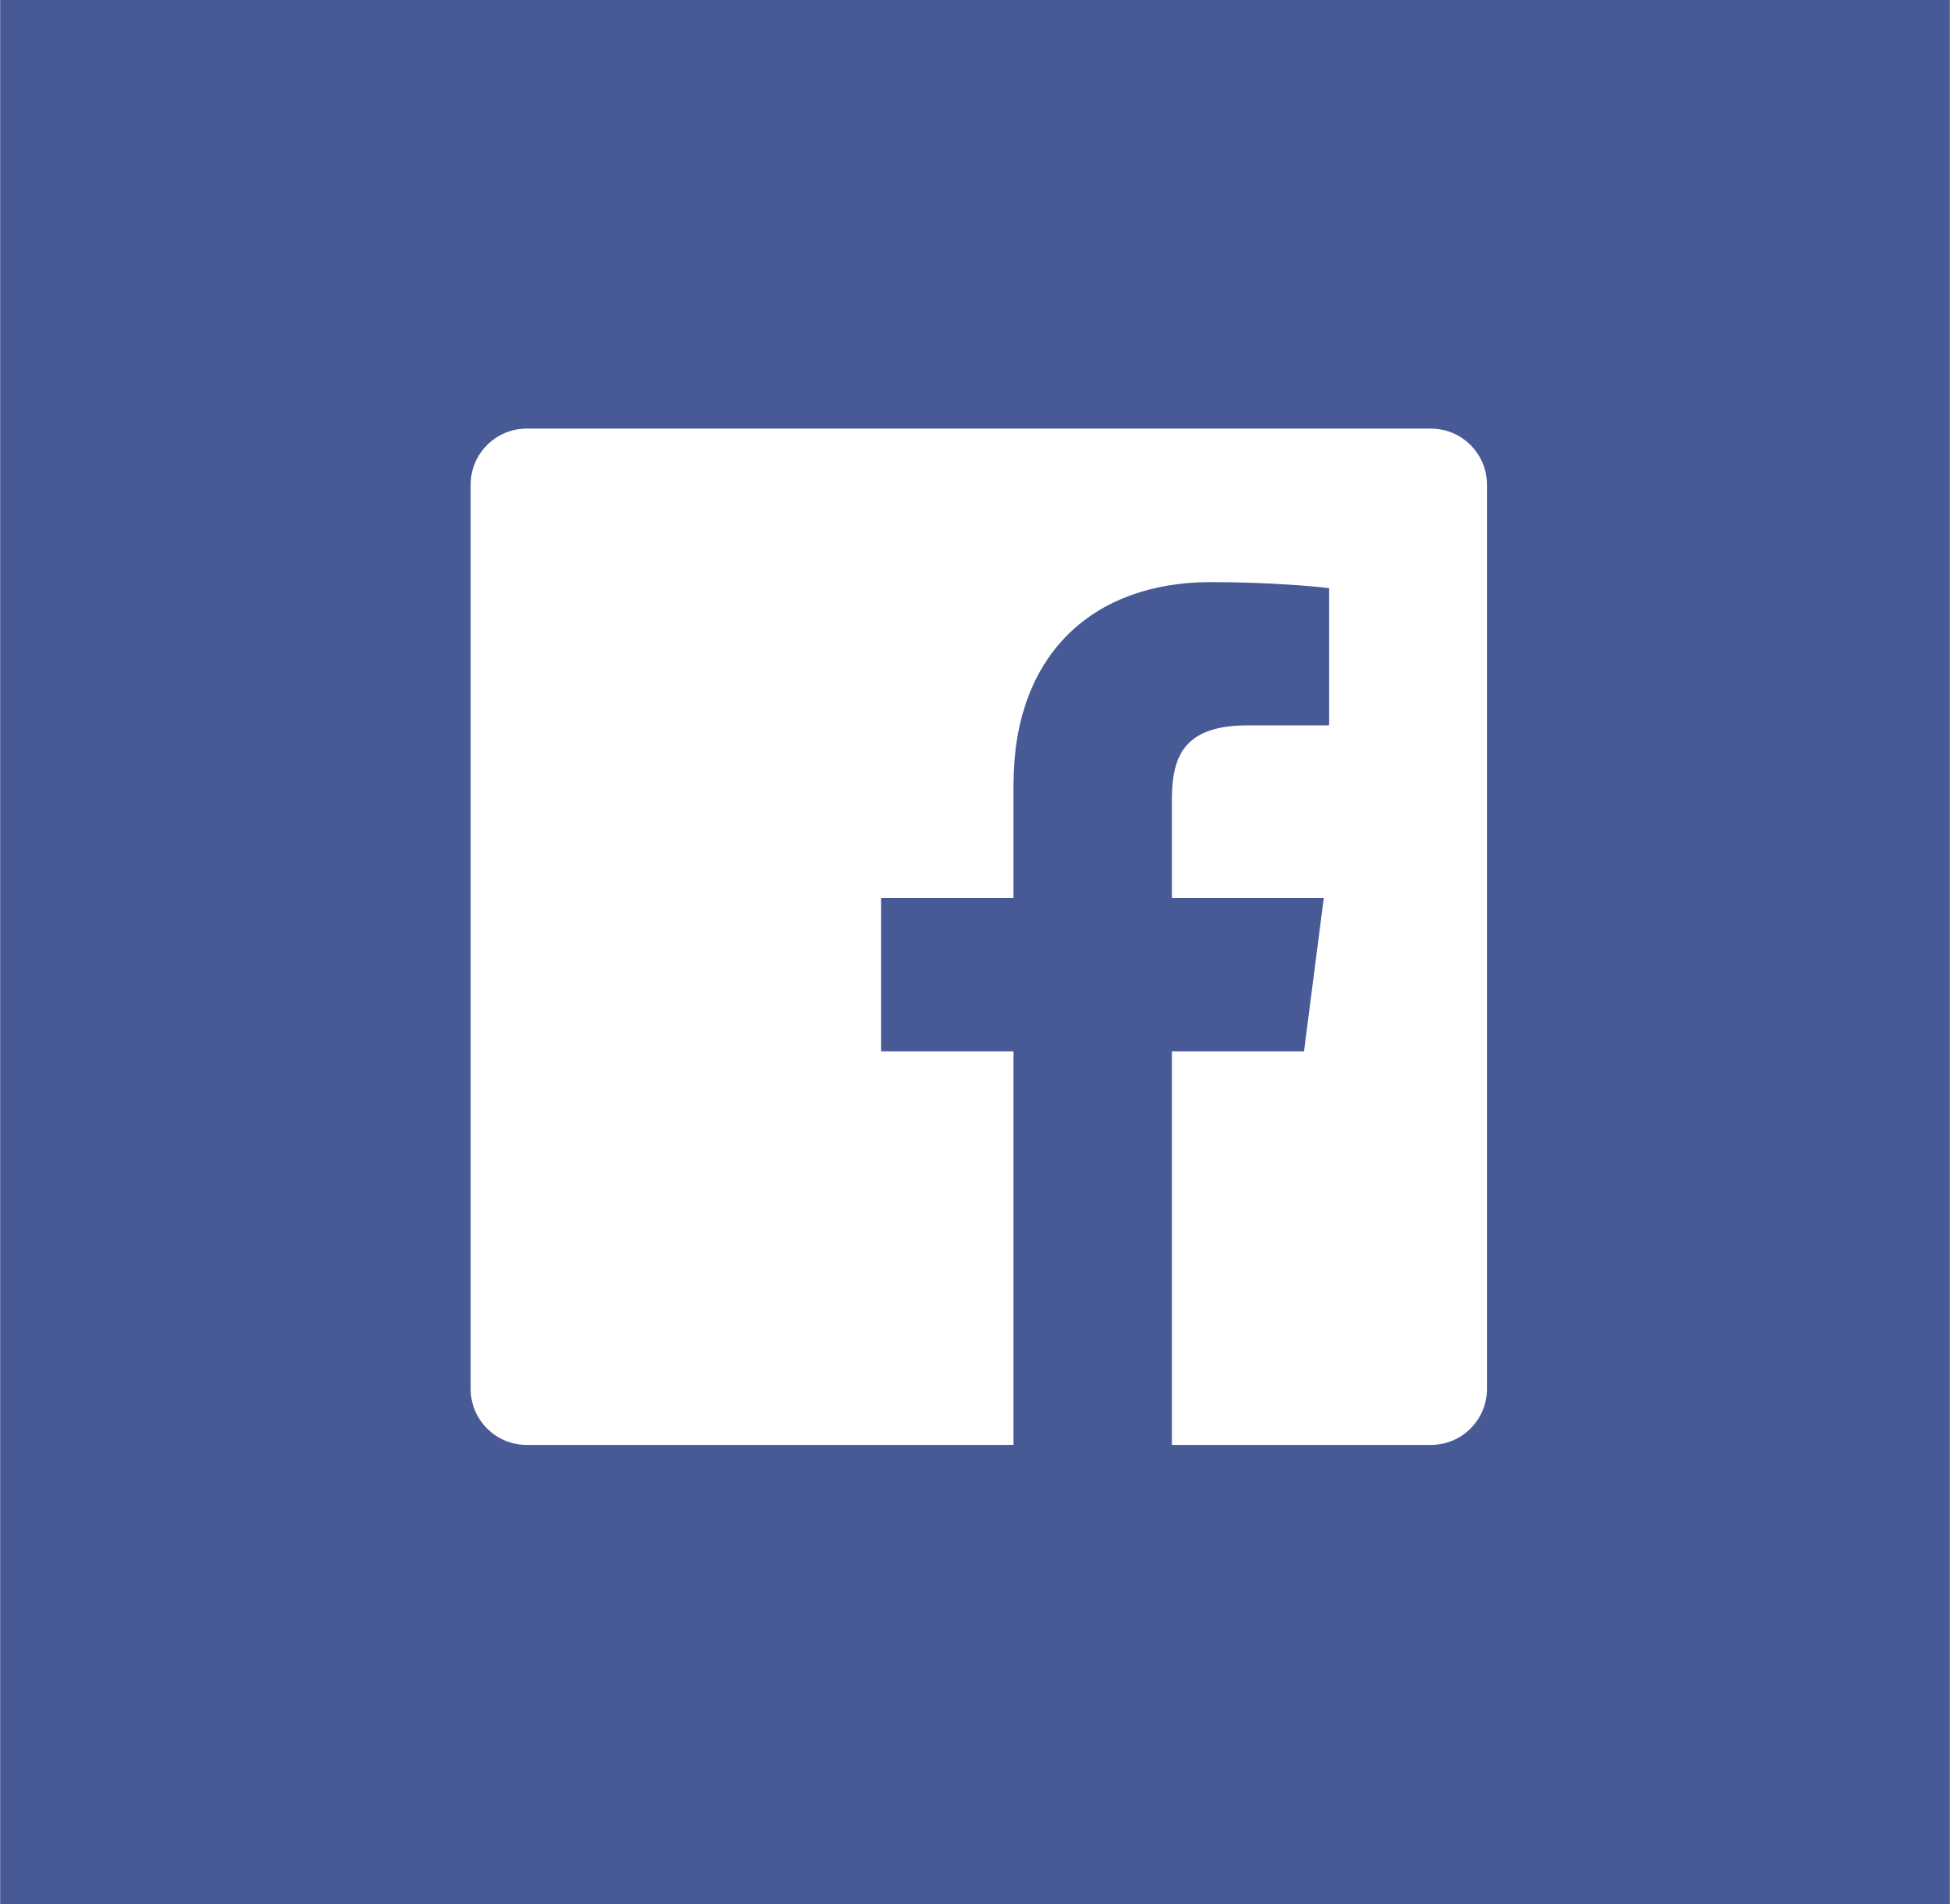 White Facebook Logo - Facebook icon white Logo PNG Transparent & SVG Vector - Freebie Supply